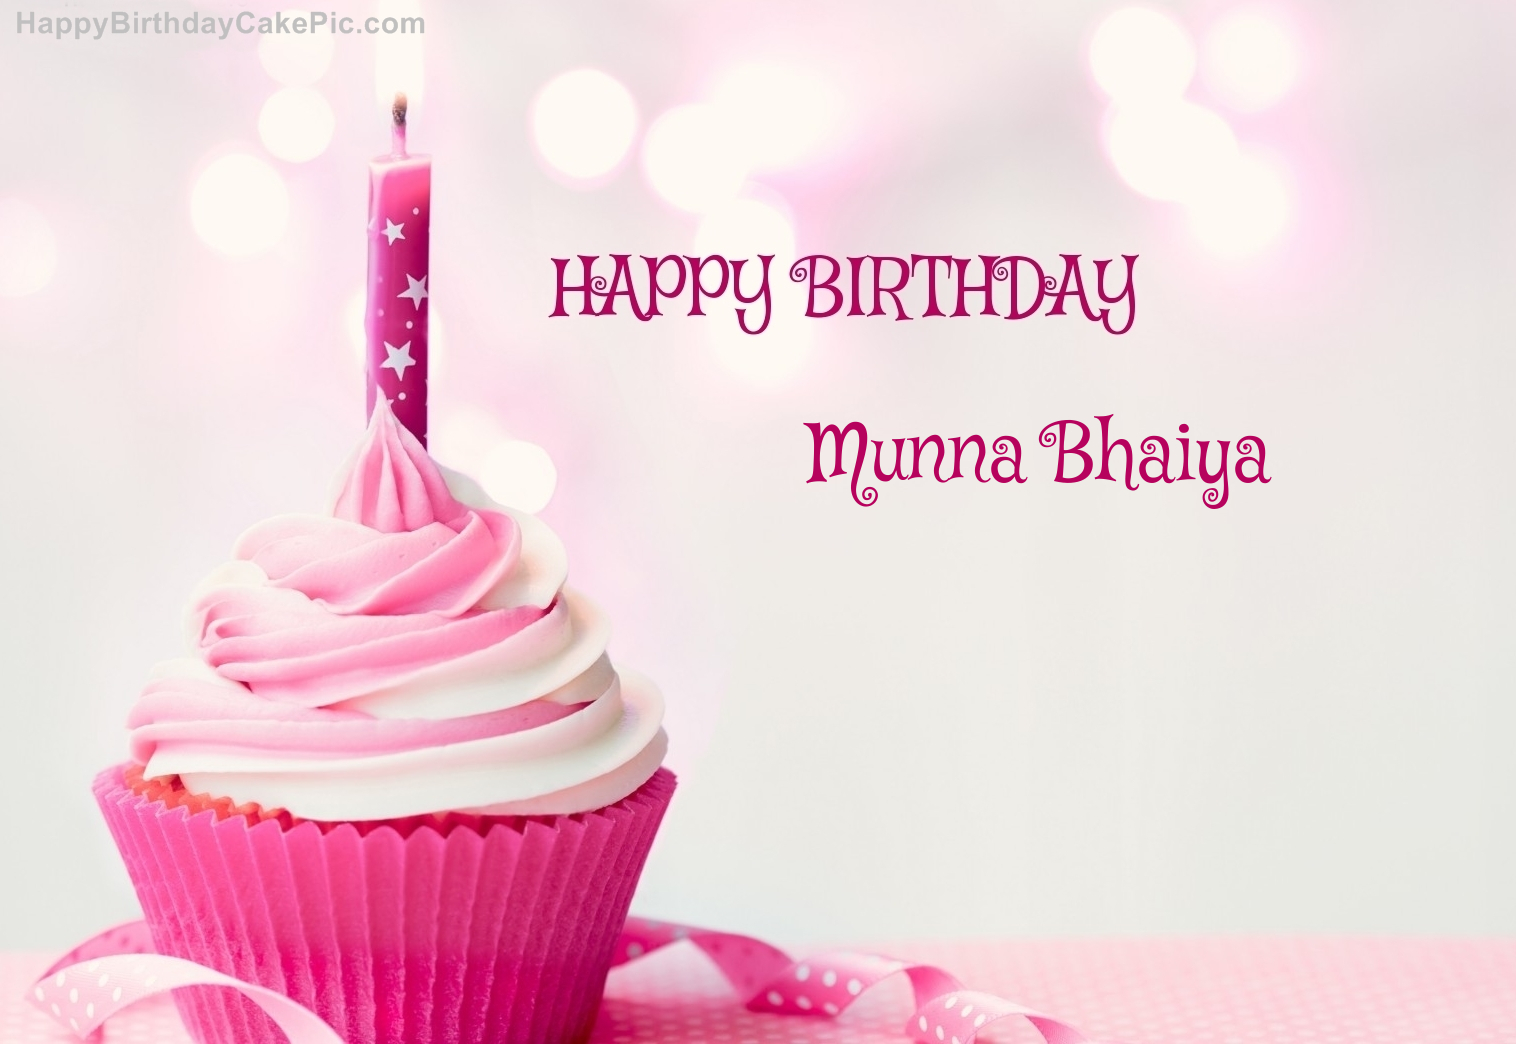 ️ Happy Birthday Cupcake Candle Pink Cake For Munna Bhaiya